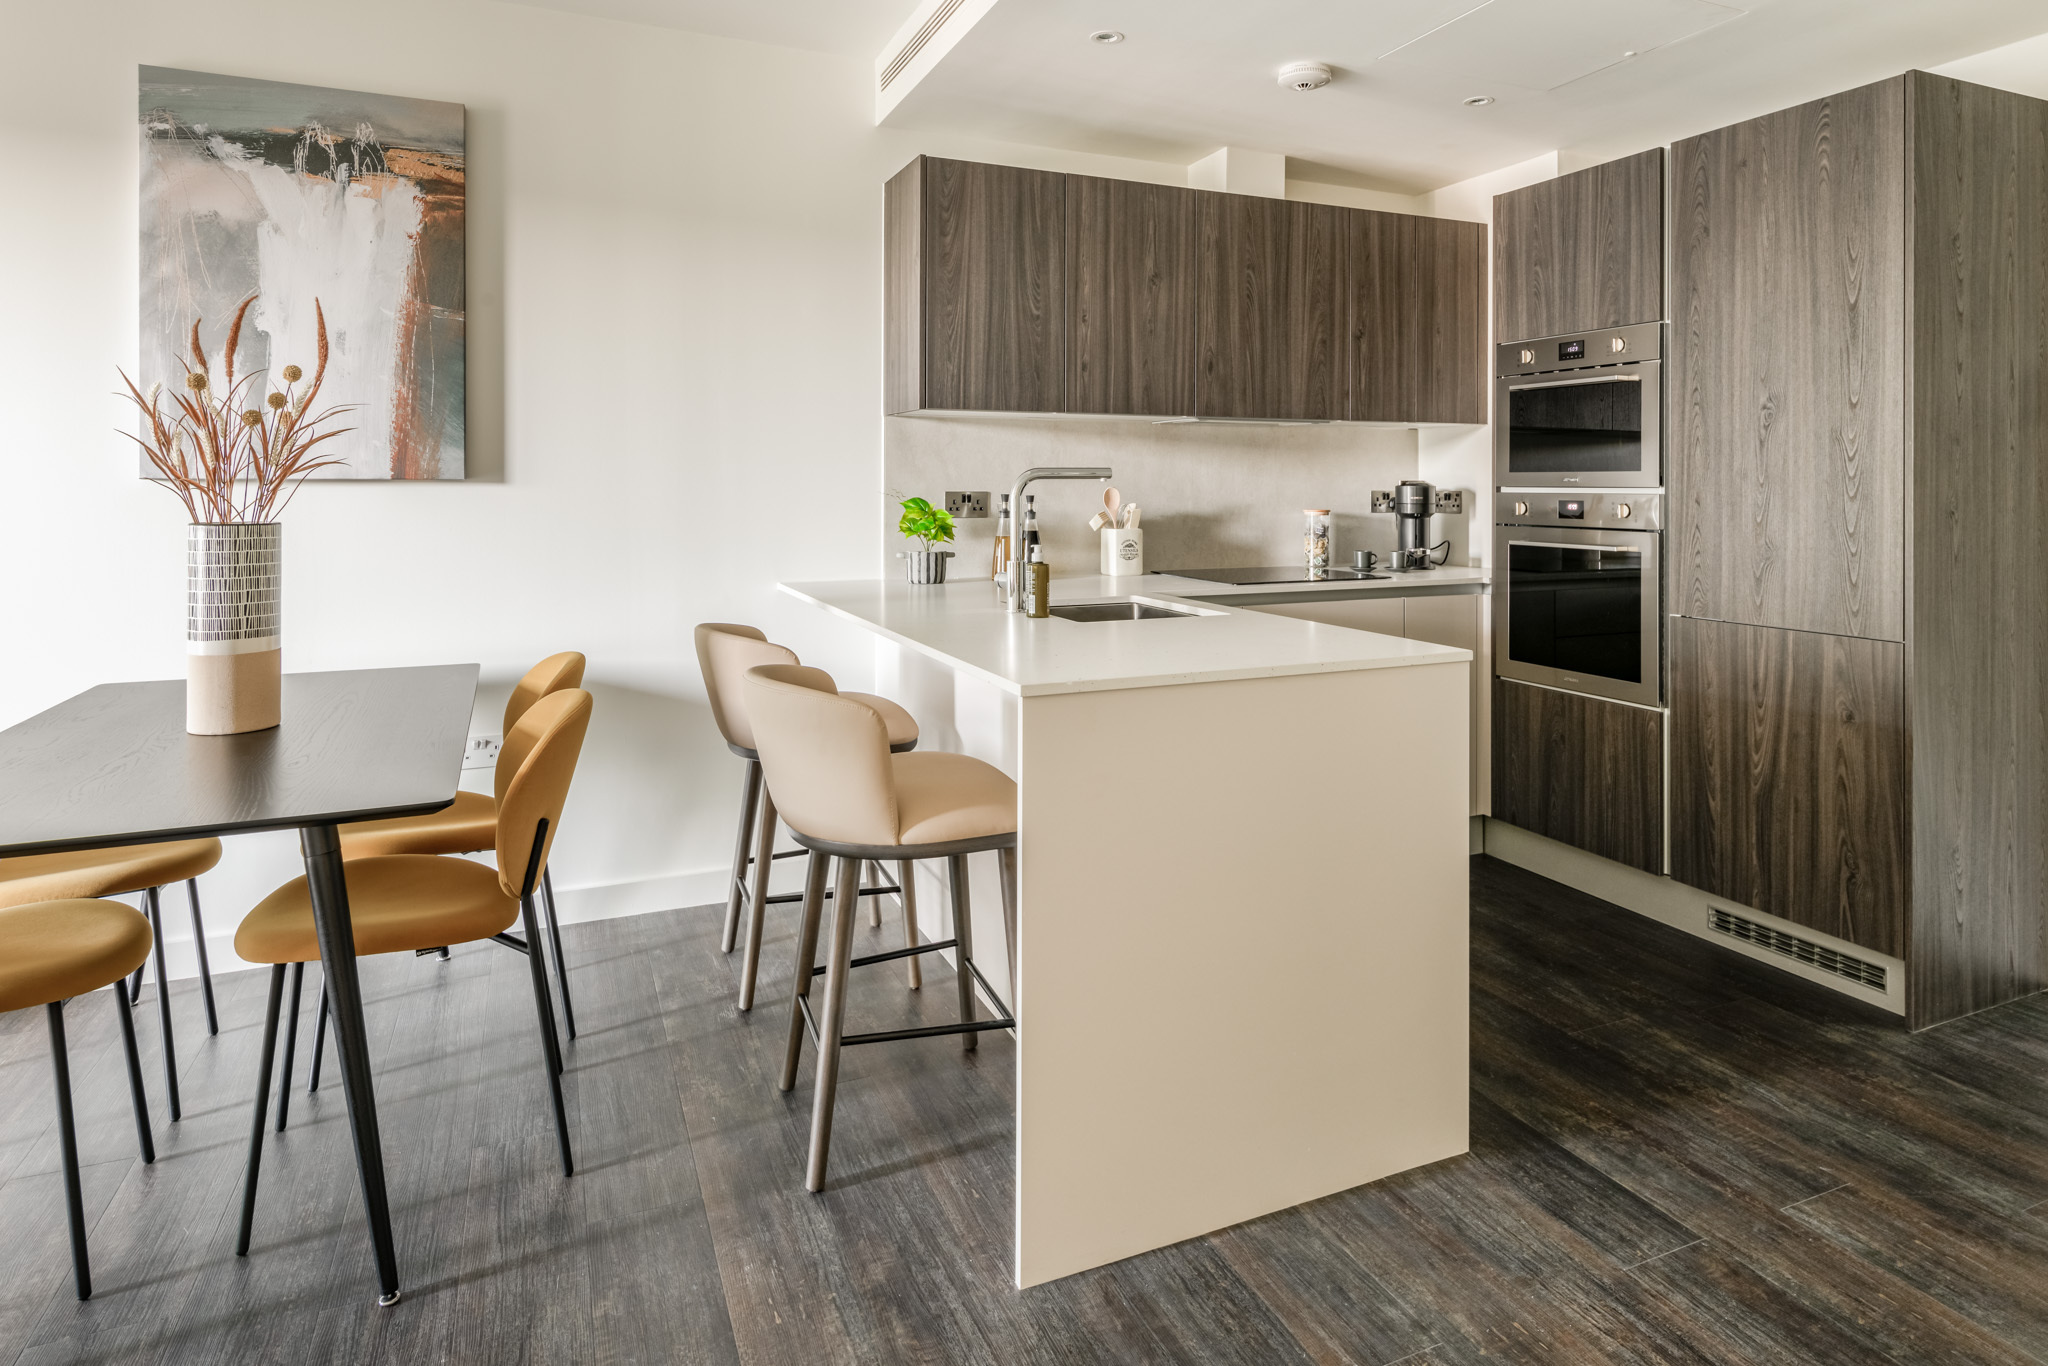 Kitchen - One Bedroom Apartment - Urban rest Battersea Apartments - London - Urban Rest